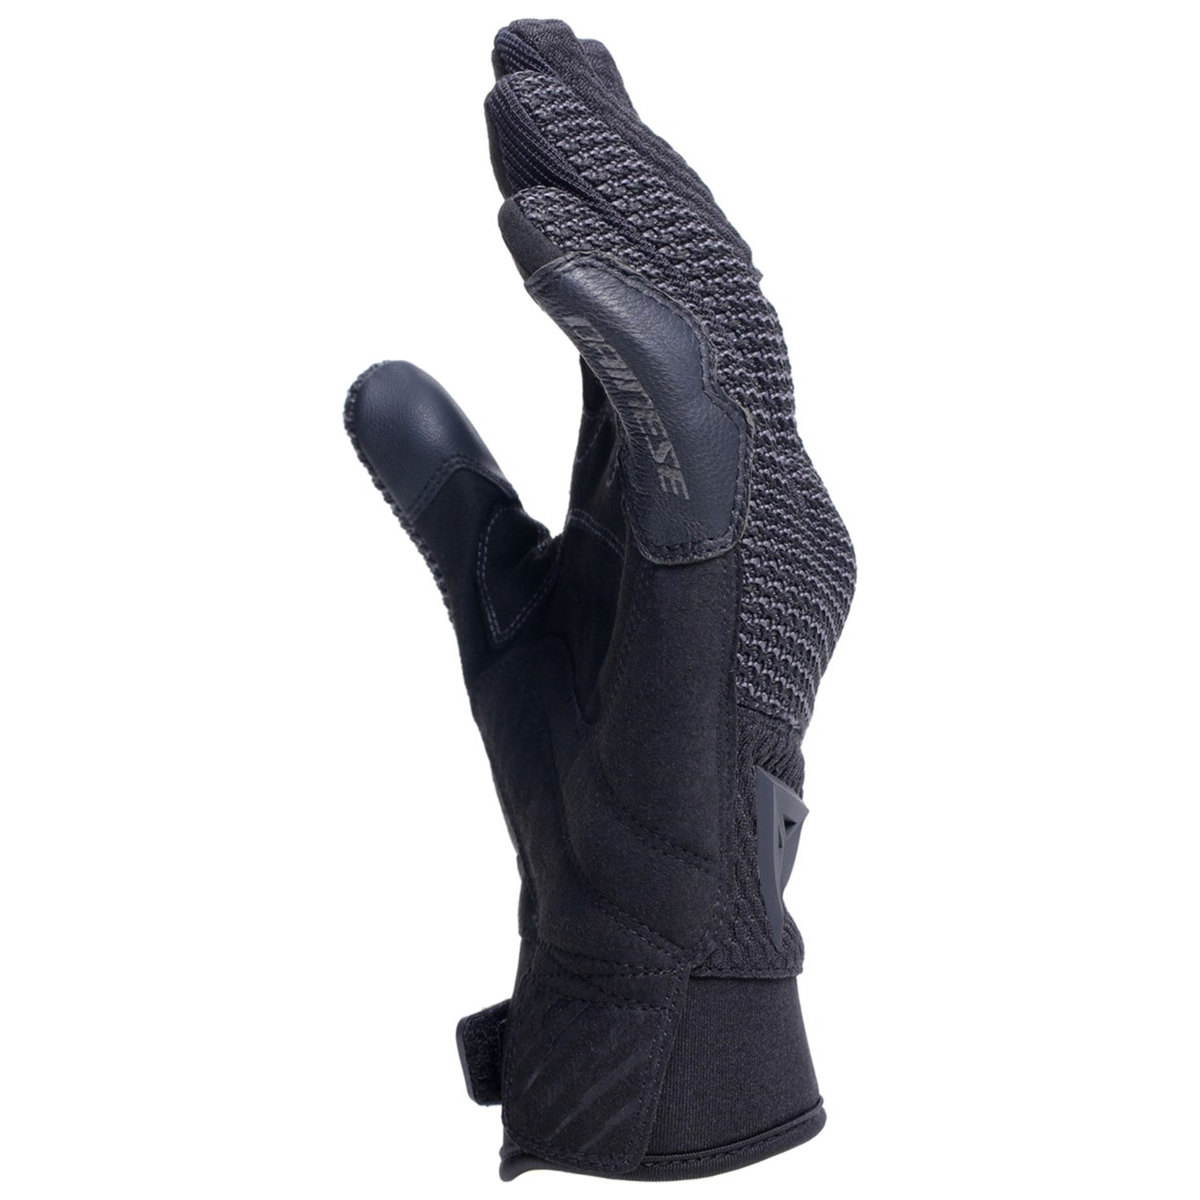 Dainese Handschuhe Torino, schwarz-anthrazit